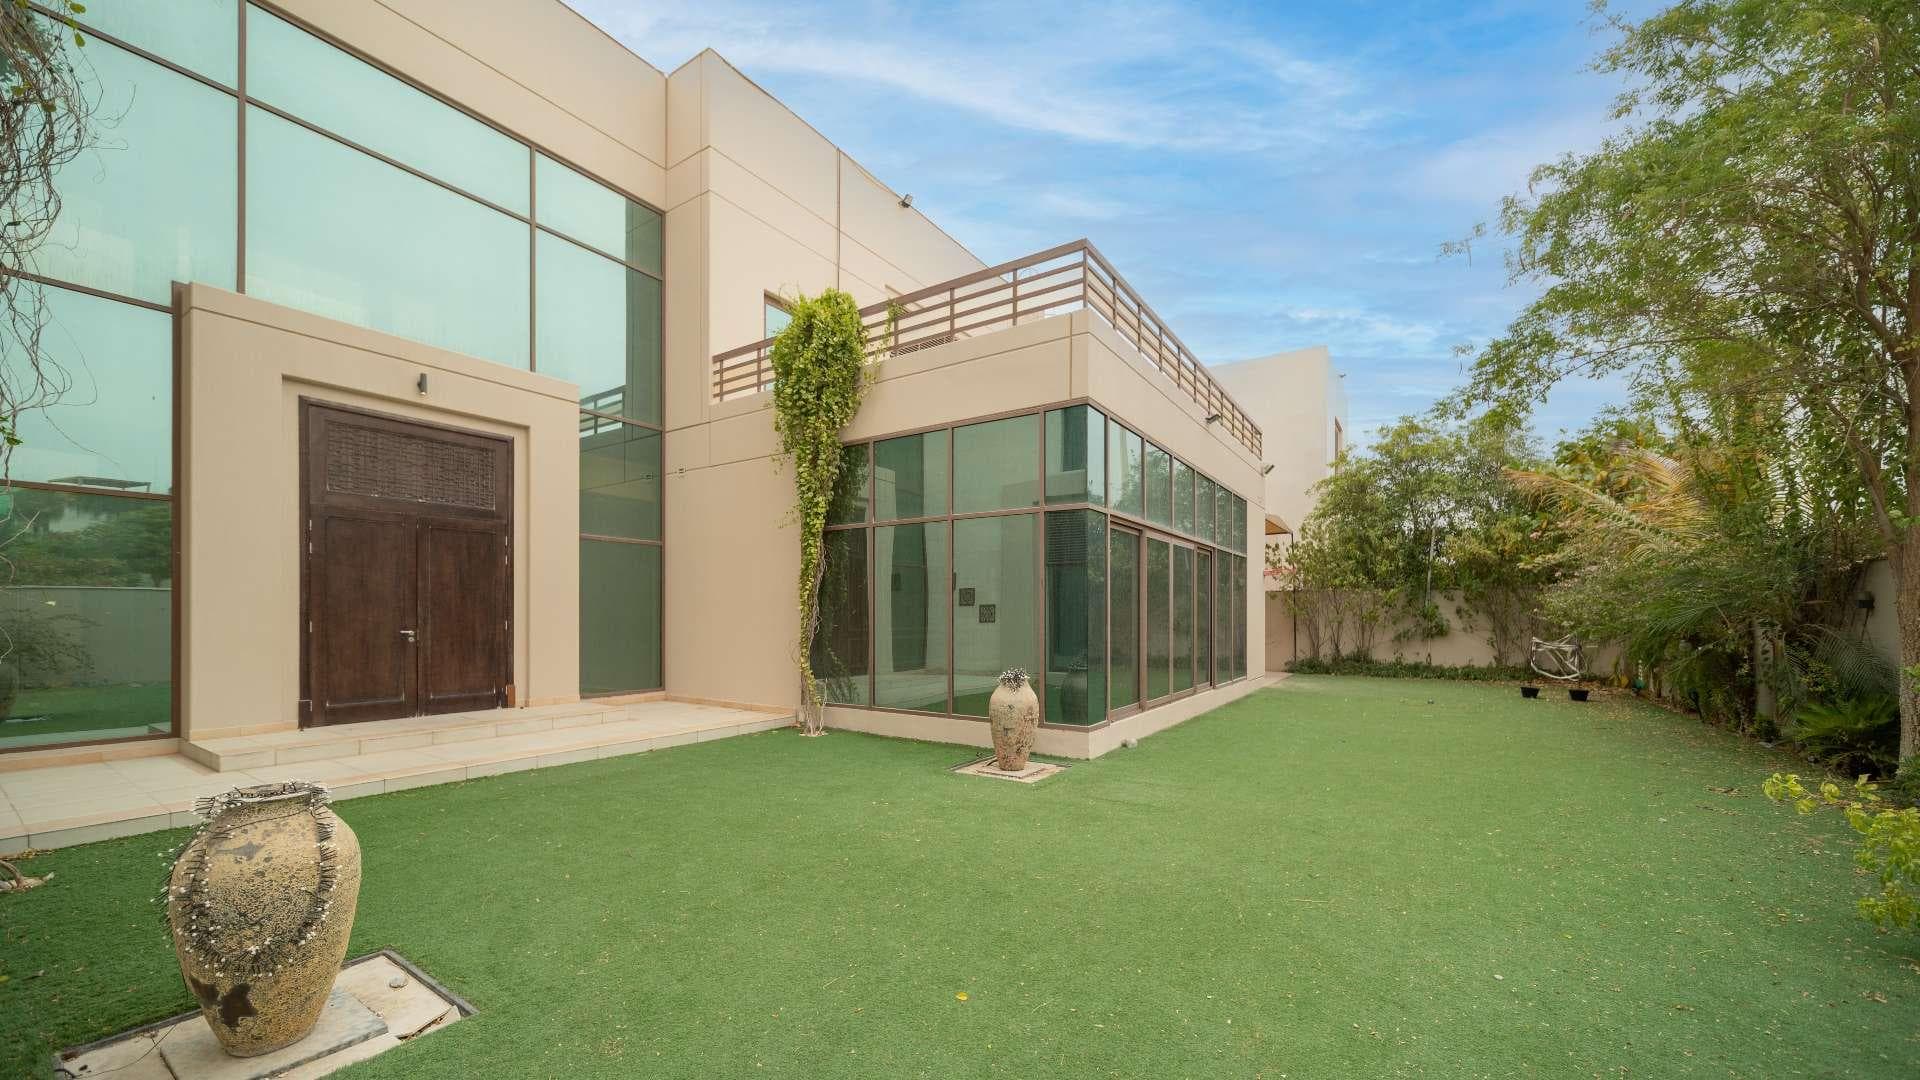 5 Bedroom Villa For Rent Meydan Gated Community Lp13922 10d61bfdc0761100.jpg